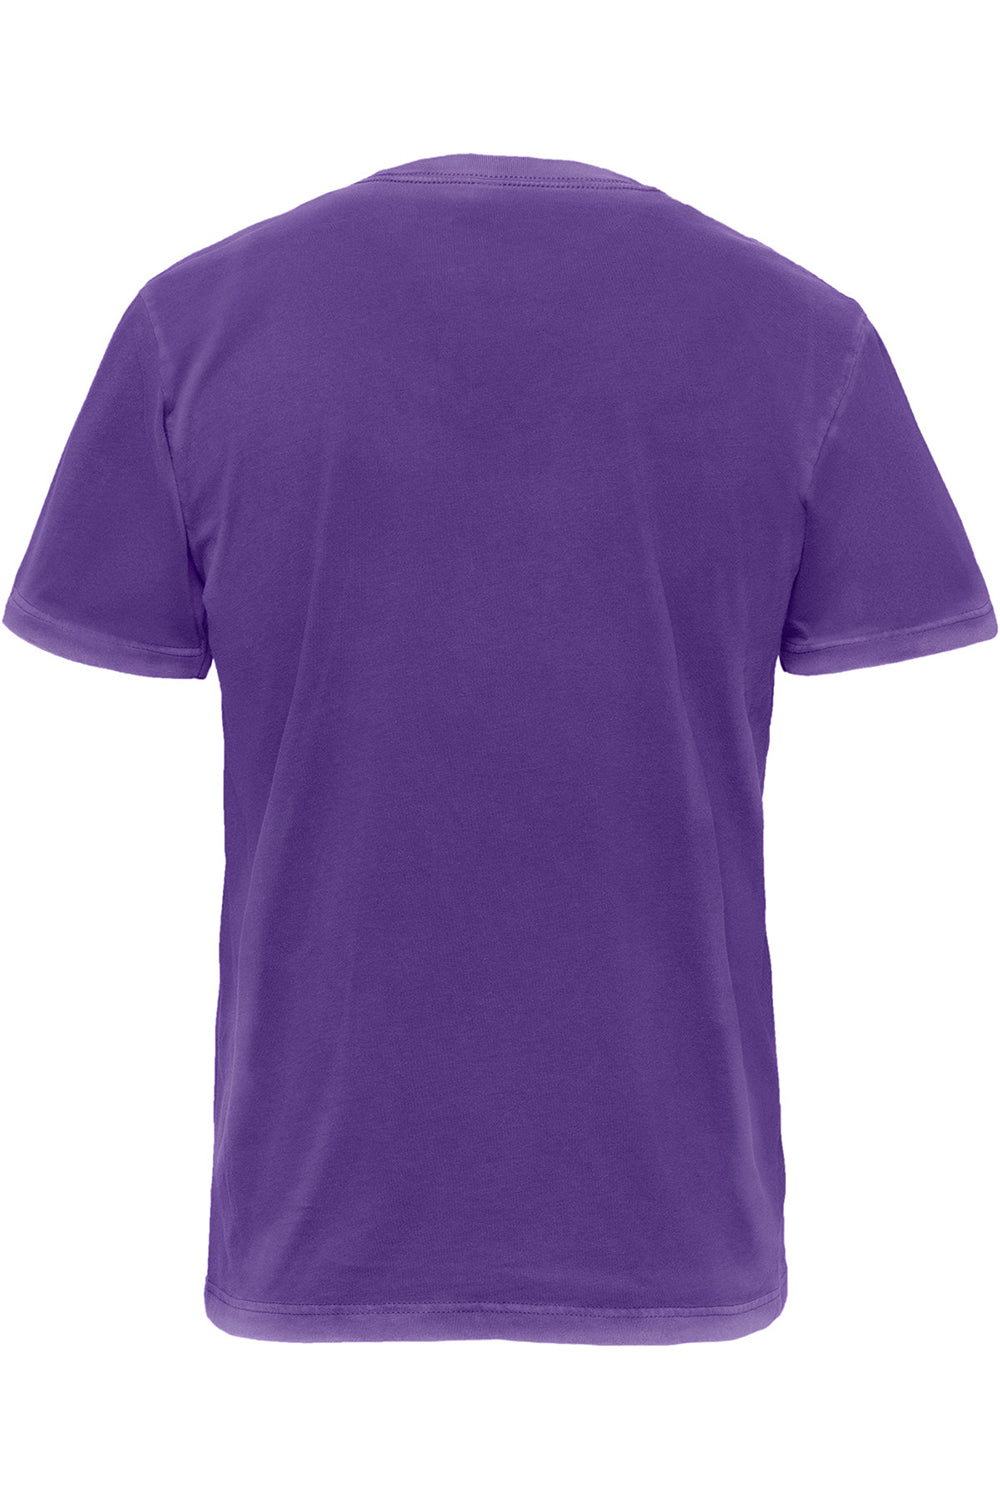 Next Level 3600SW Mens Soft Wash Short Sleeve Crewneck T-Shirt Purple Rush Flat Back